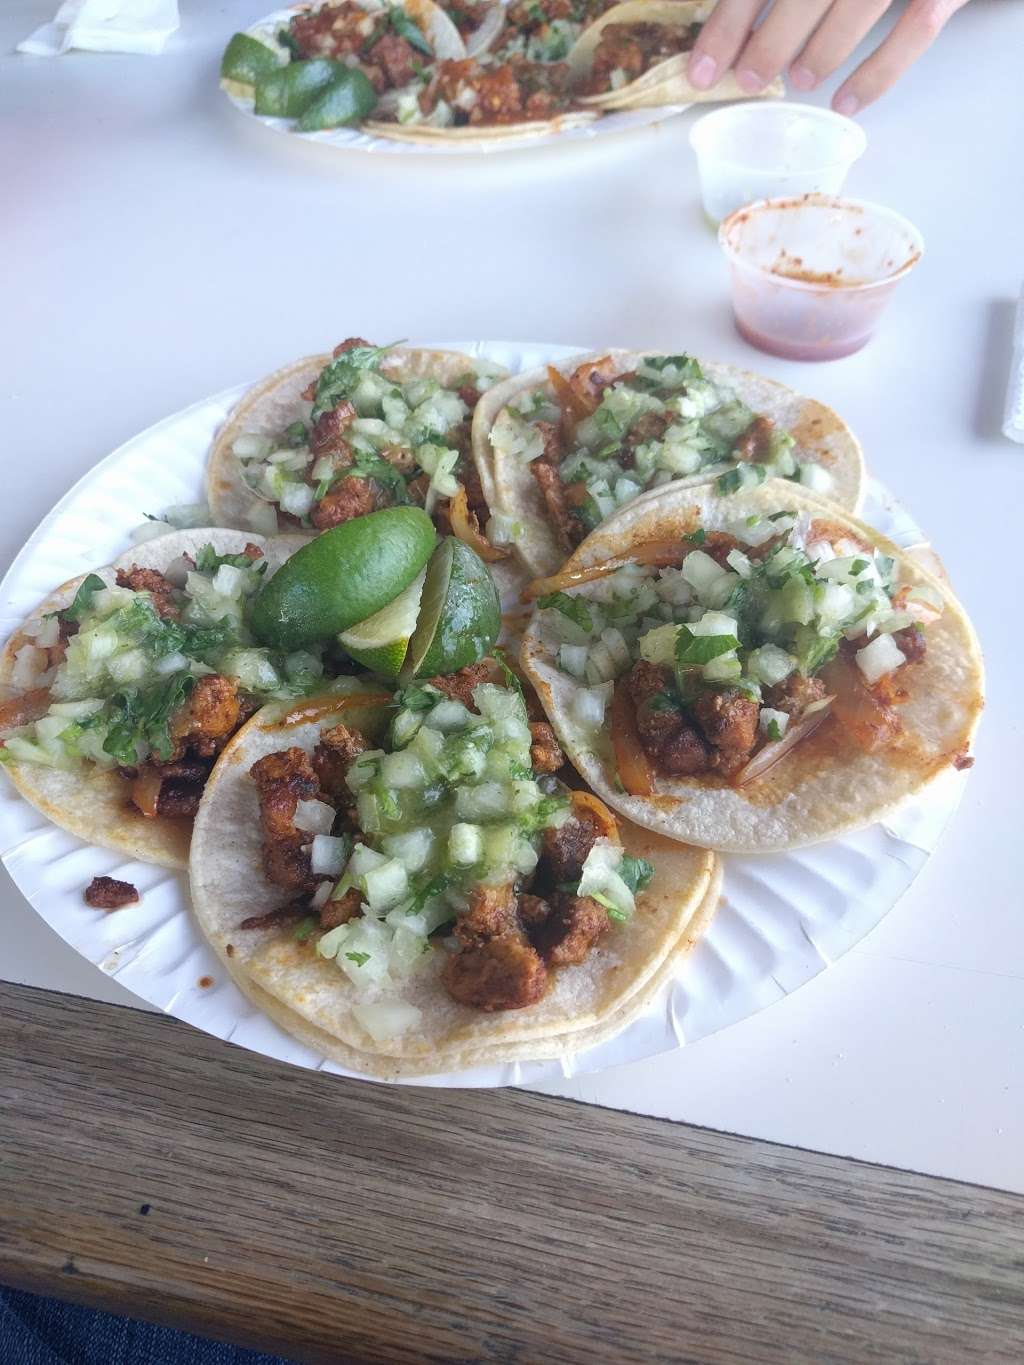 Tacos Jalapa | 154 W El Camino Real, Sunnyvale, CA 94087 | Phone: (408) 738-5945